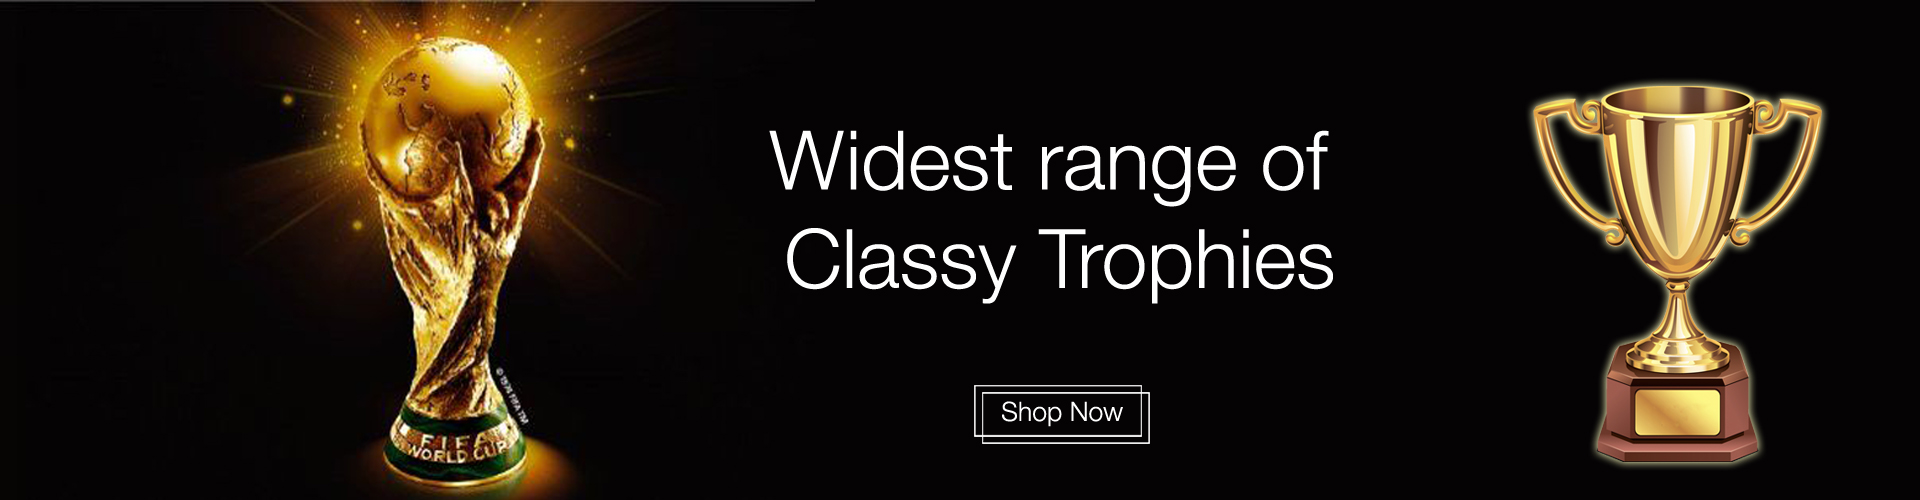 widest range of classy trophies